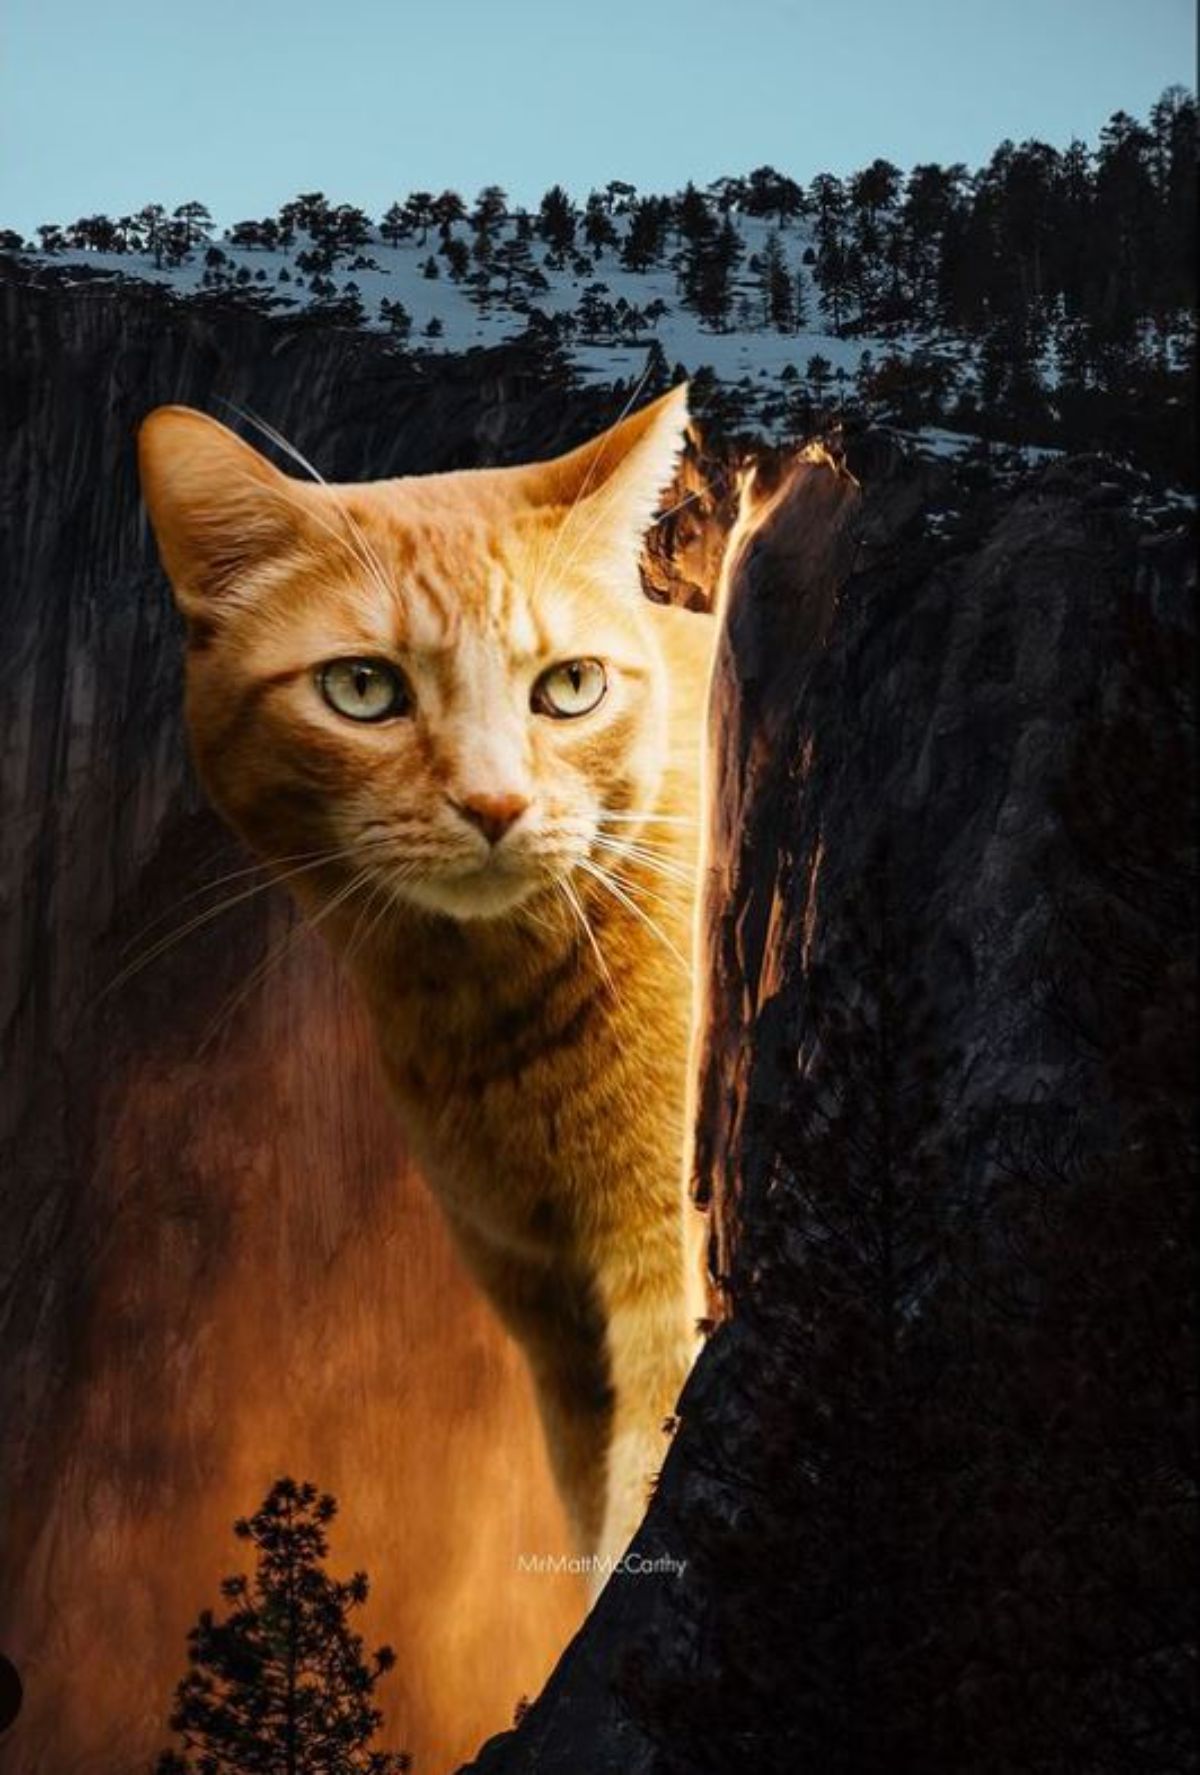 large photoshopped orange cat sitting by a cliff